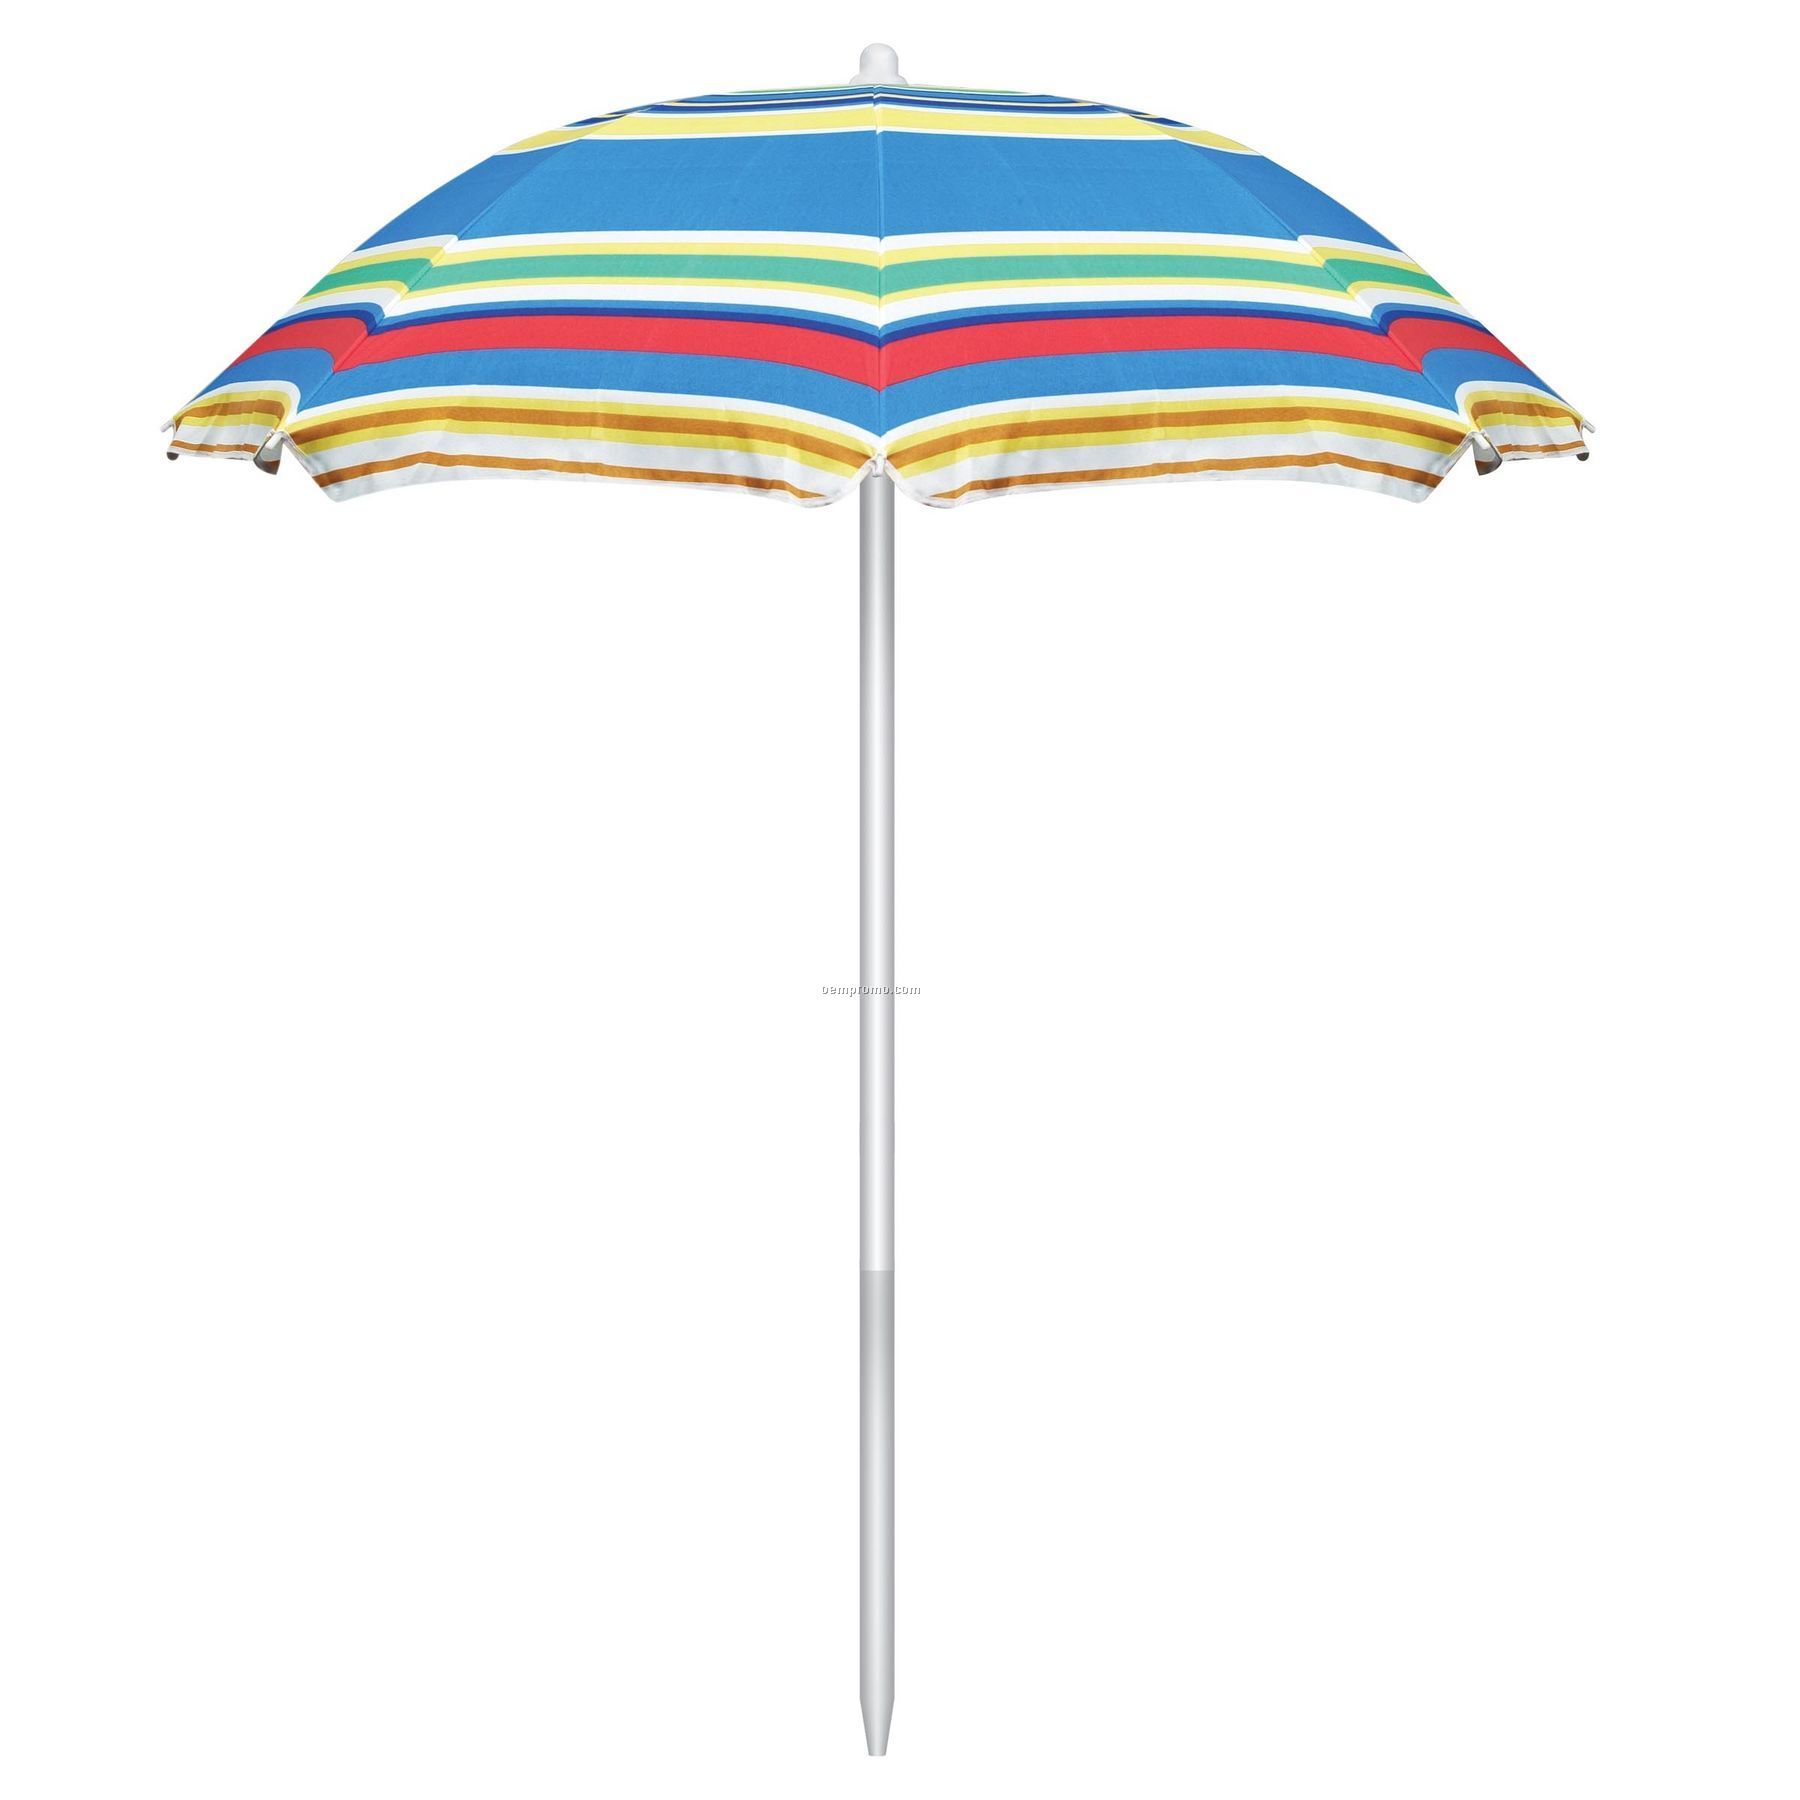 62" Striped Patio Umbrella W/ Tilt Feature